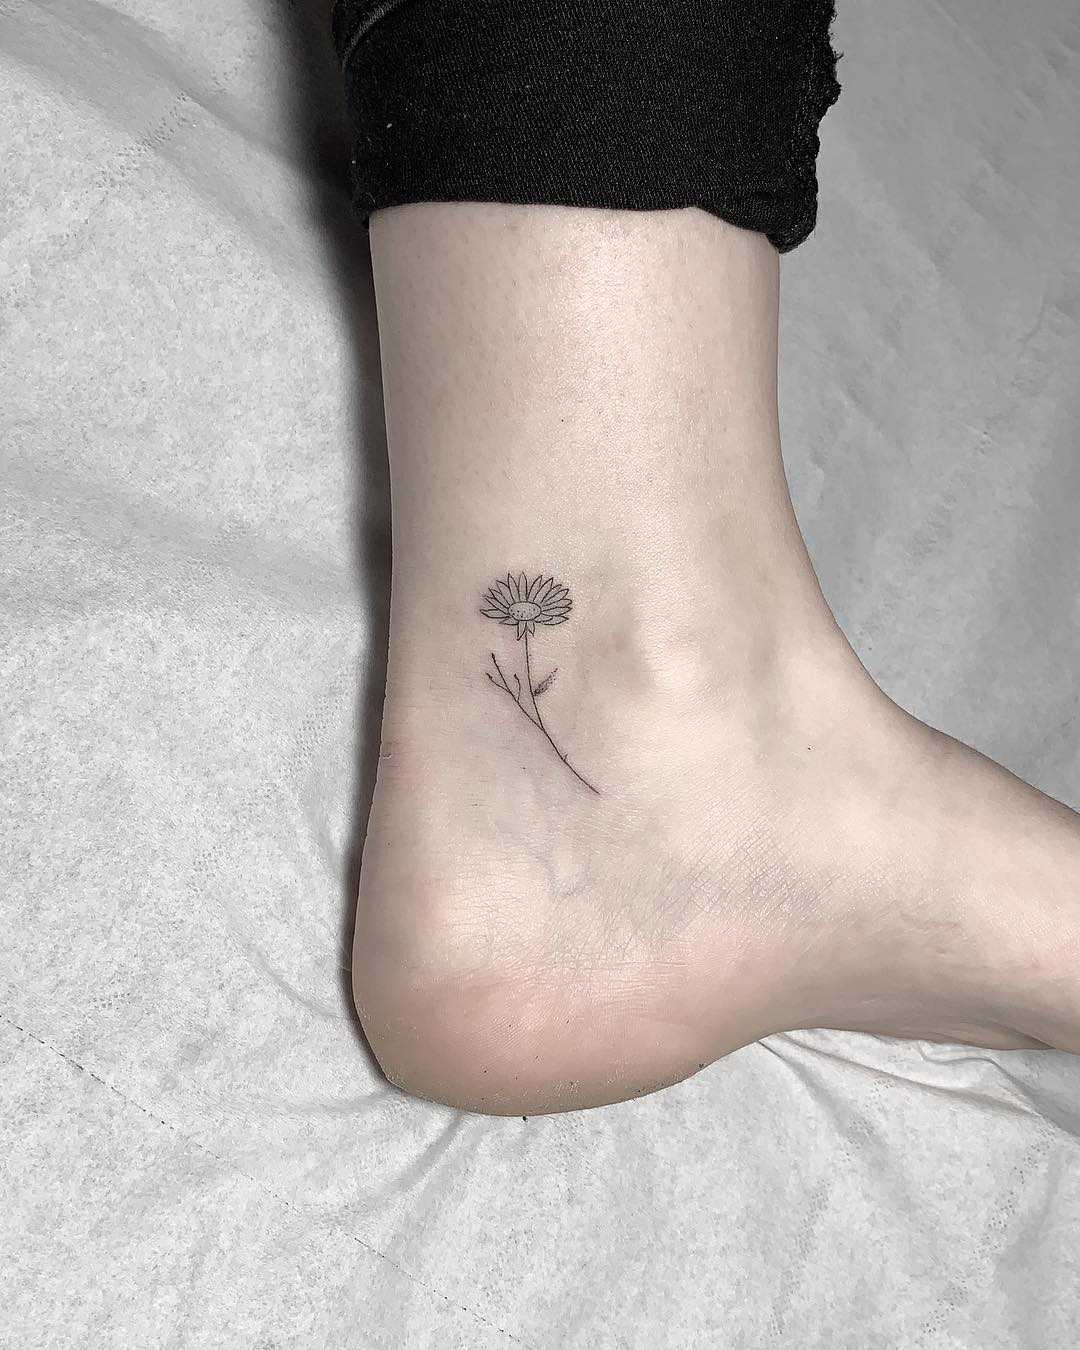 Fineline sunflower tattoo by Conz Thomas